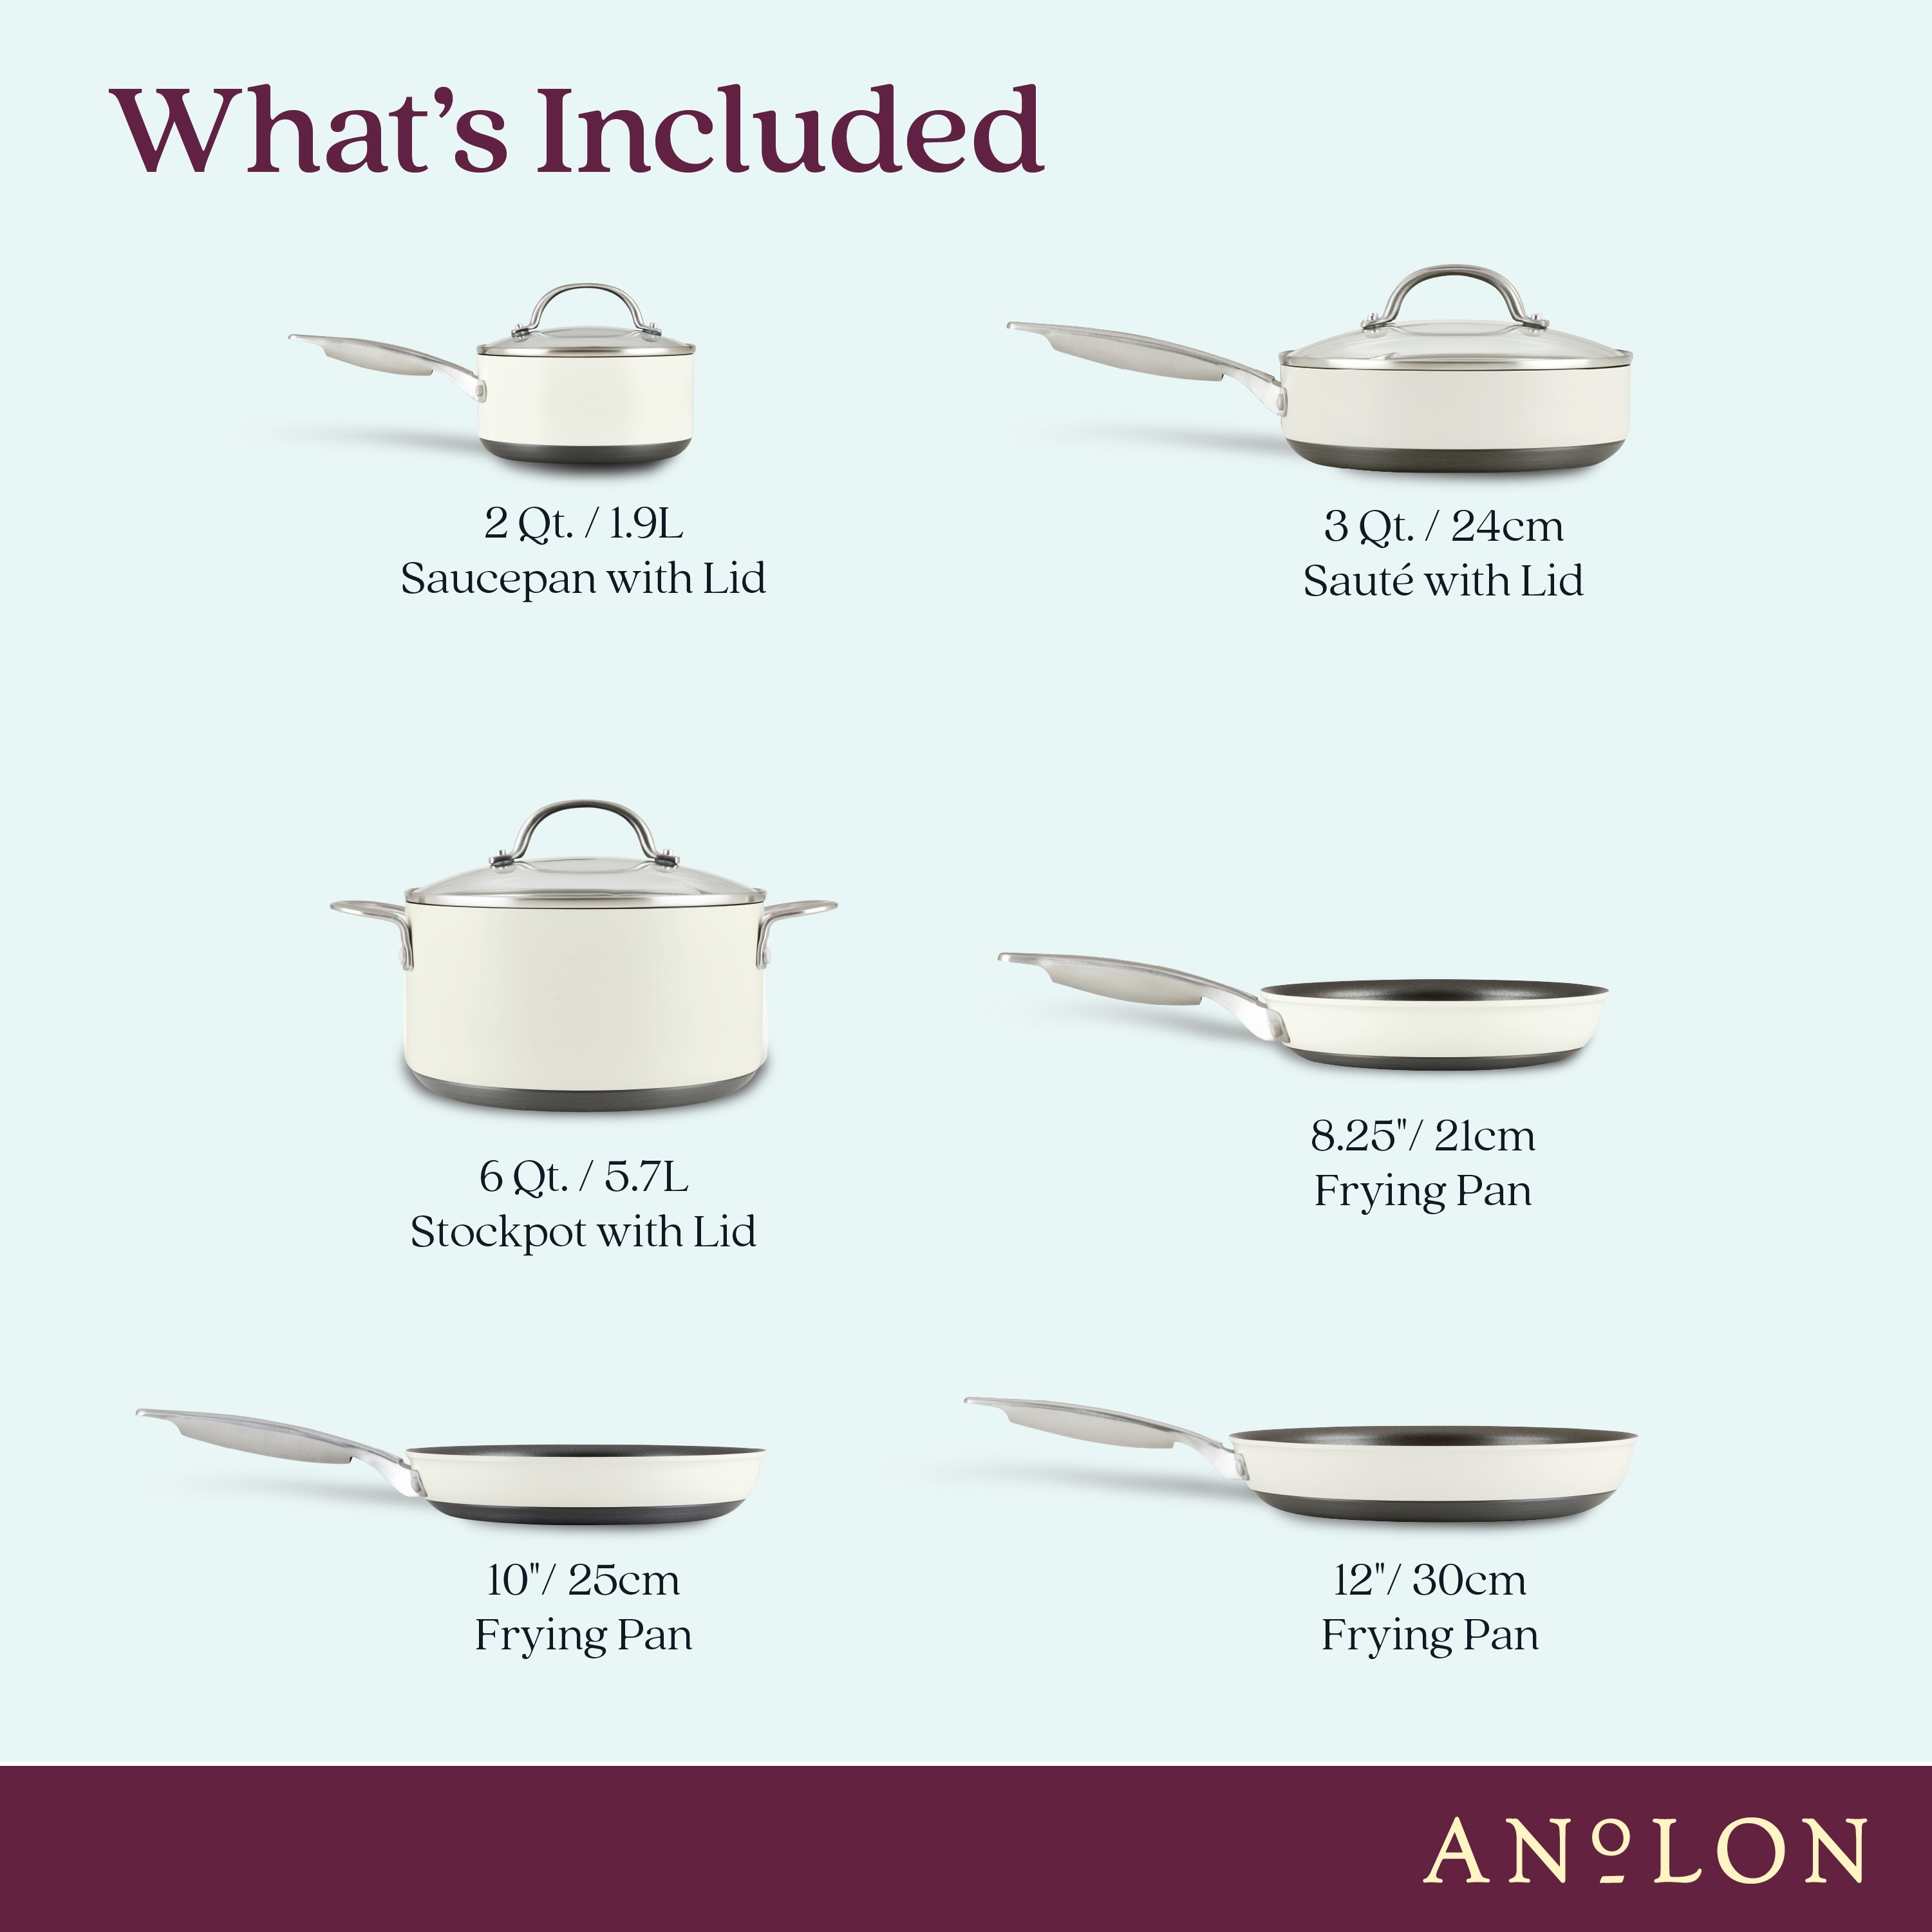 Anolon Achieve Hard Anodized Nonstick Cookware Pots and Pans Set, 9 Piece - Teal